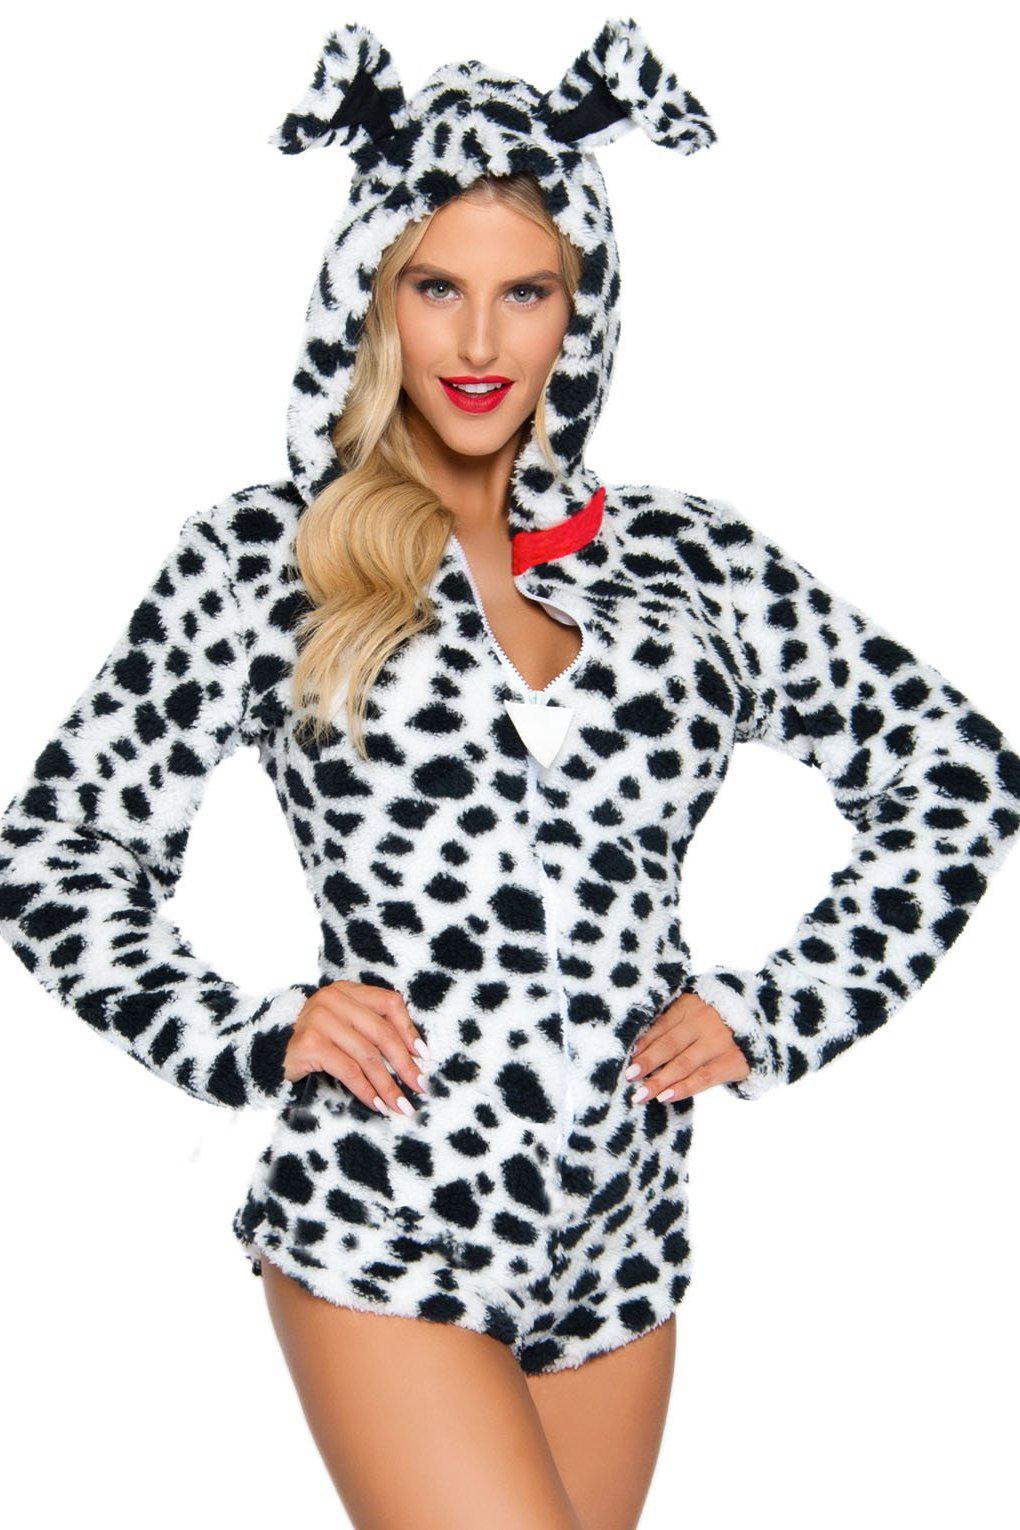 Darling Dalmatian Costume-Animal Costumes-Leg Avenue-Black-S-SEXYSHOES.COM